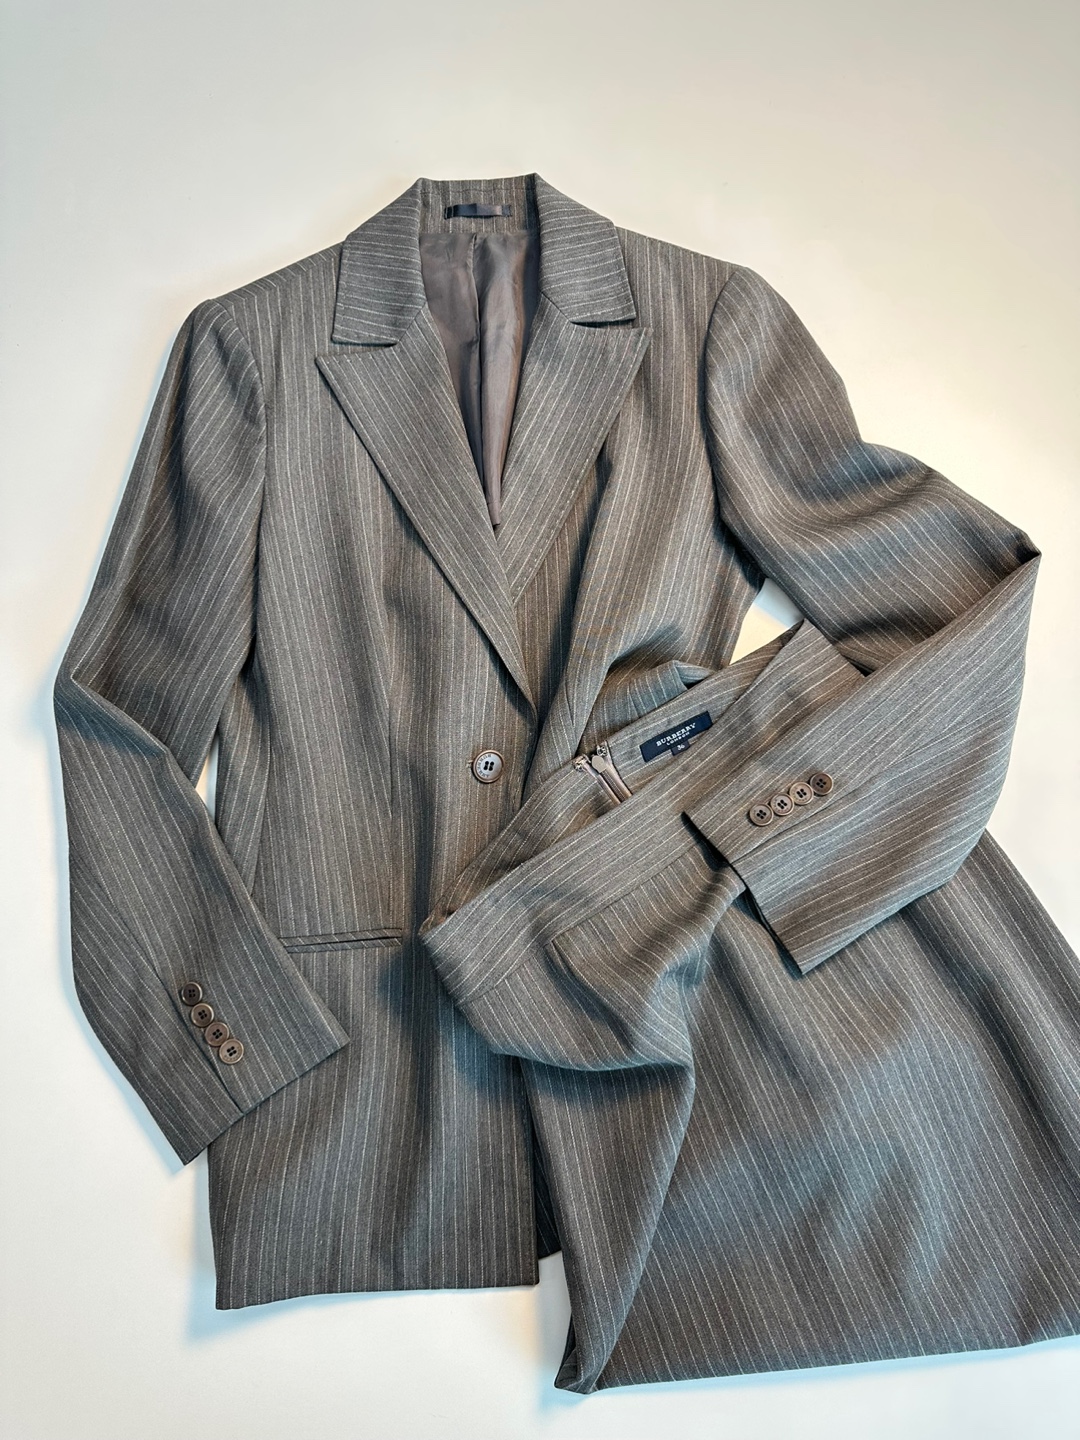 Burberry Gray Striped Jacket Skirt Two Piece Setup [27-28 inch]